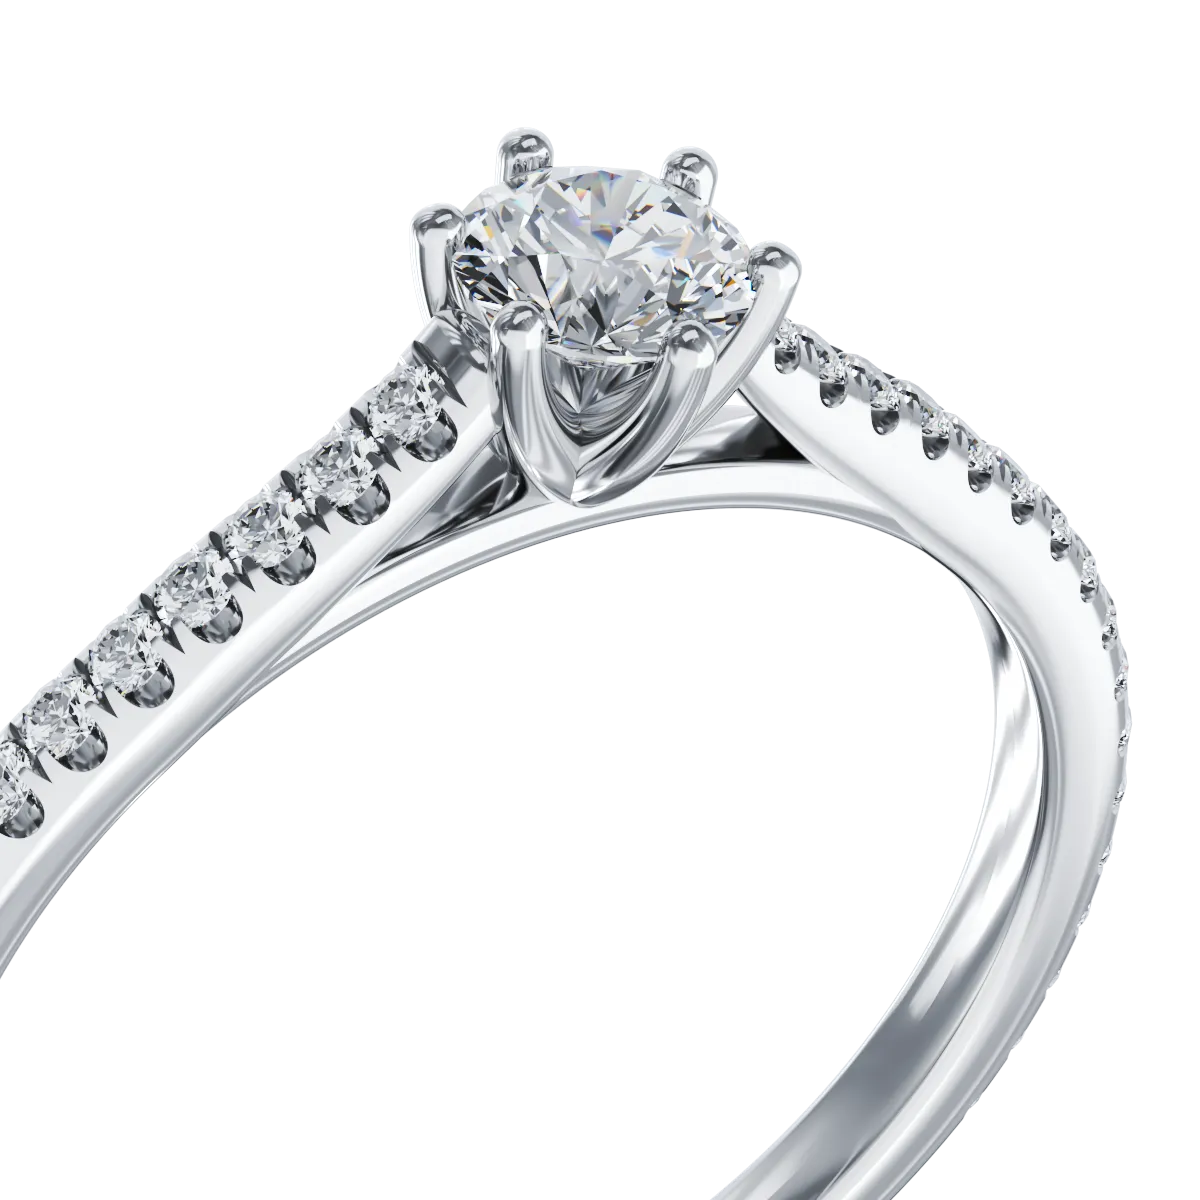 Platinum engagement ring with 0.2ct diamond and 0.165ct diamonds